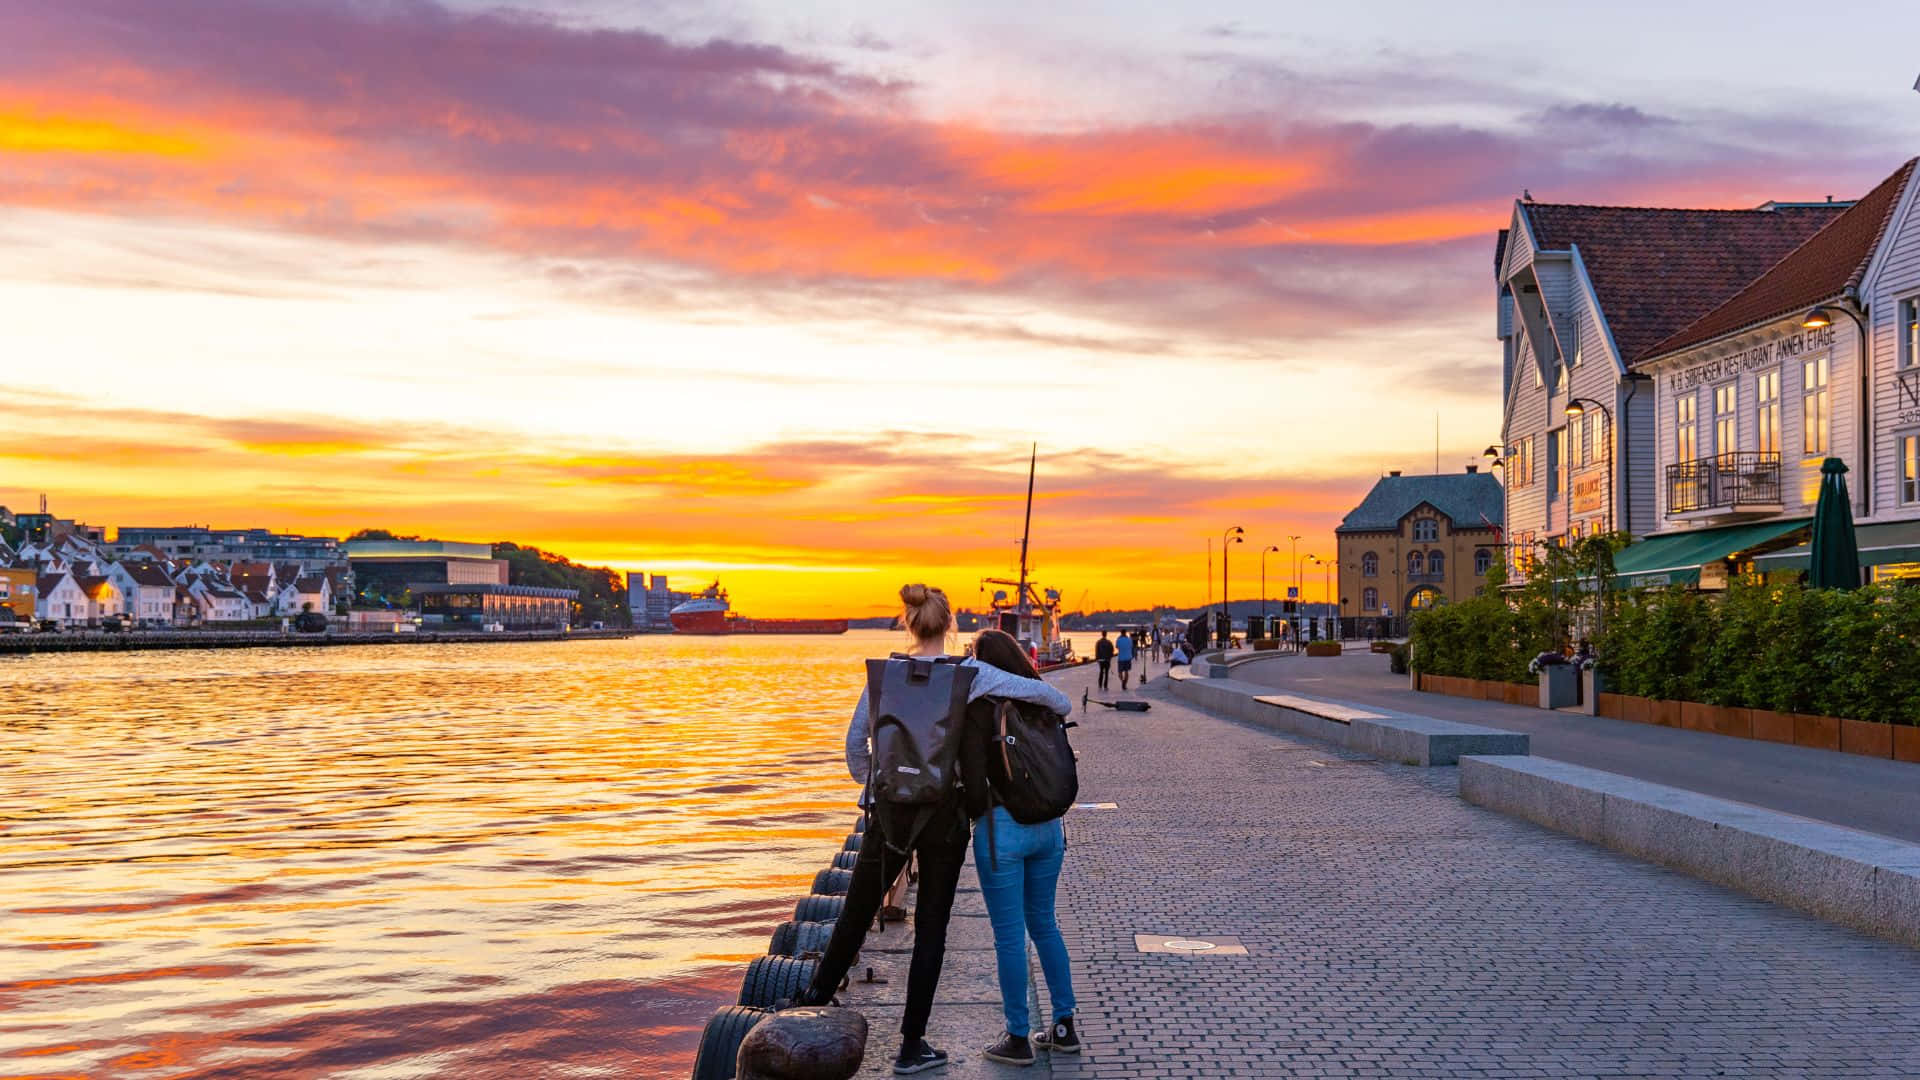 Stavanger Waterfront Sunset Wallpaper